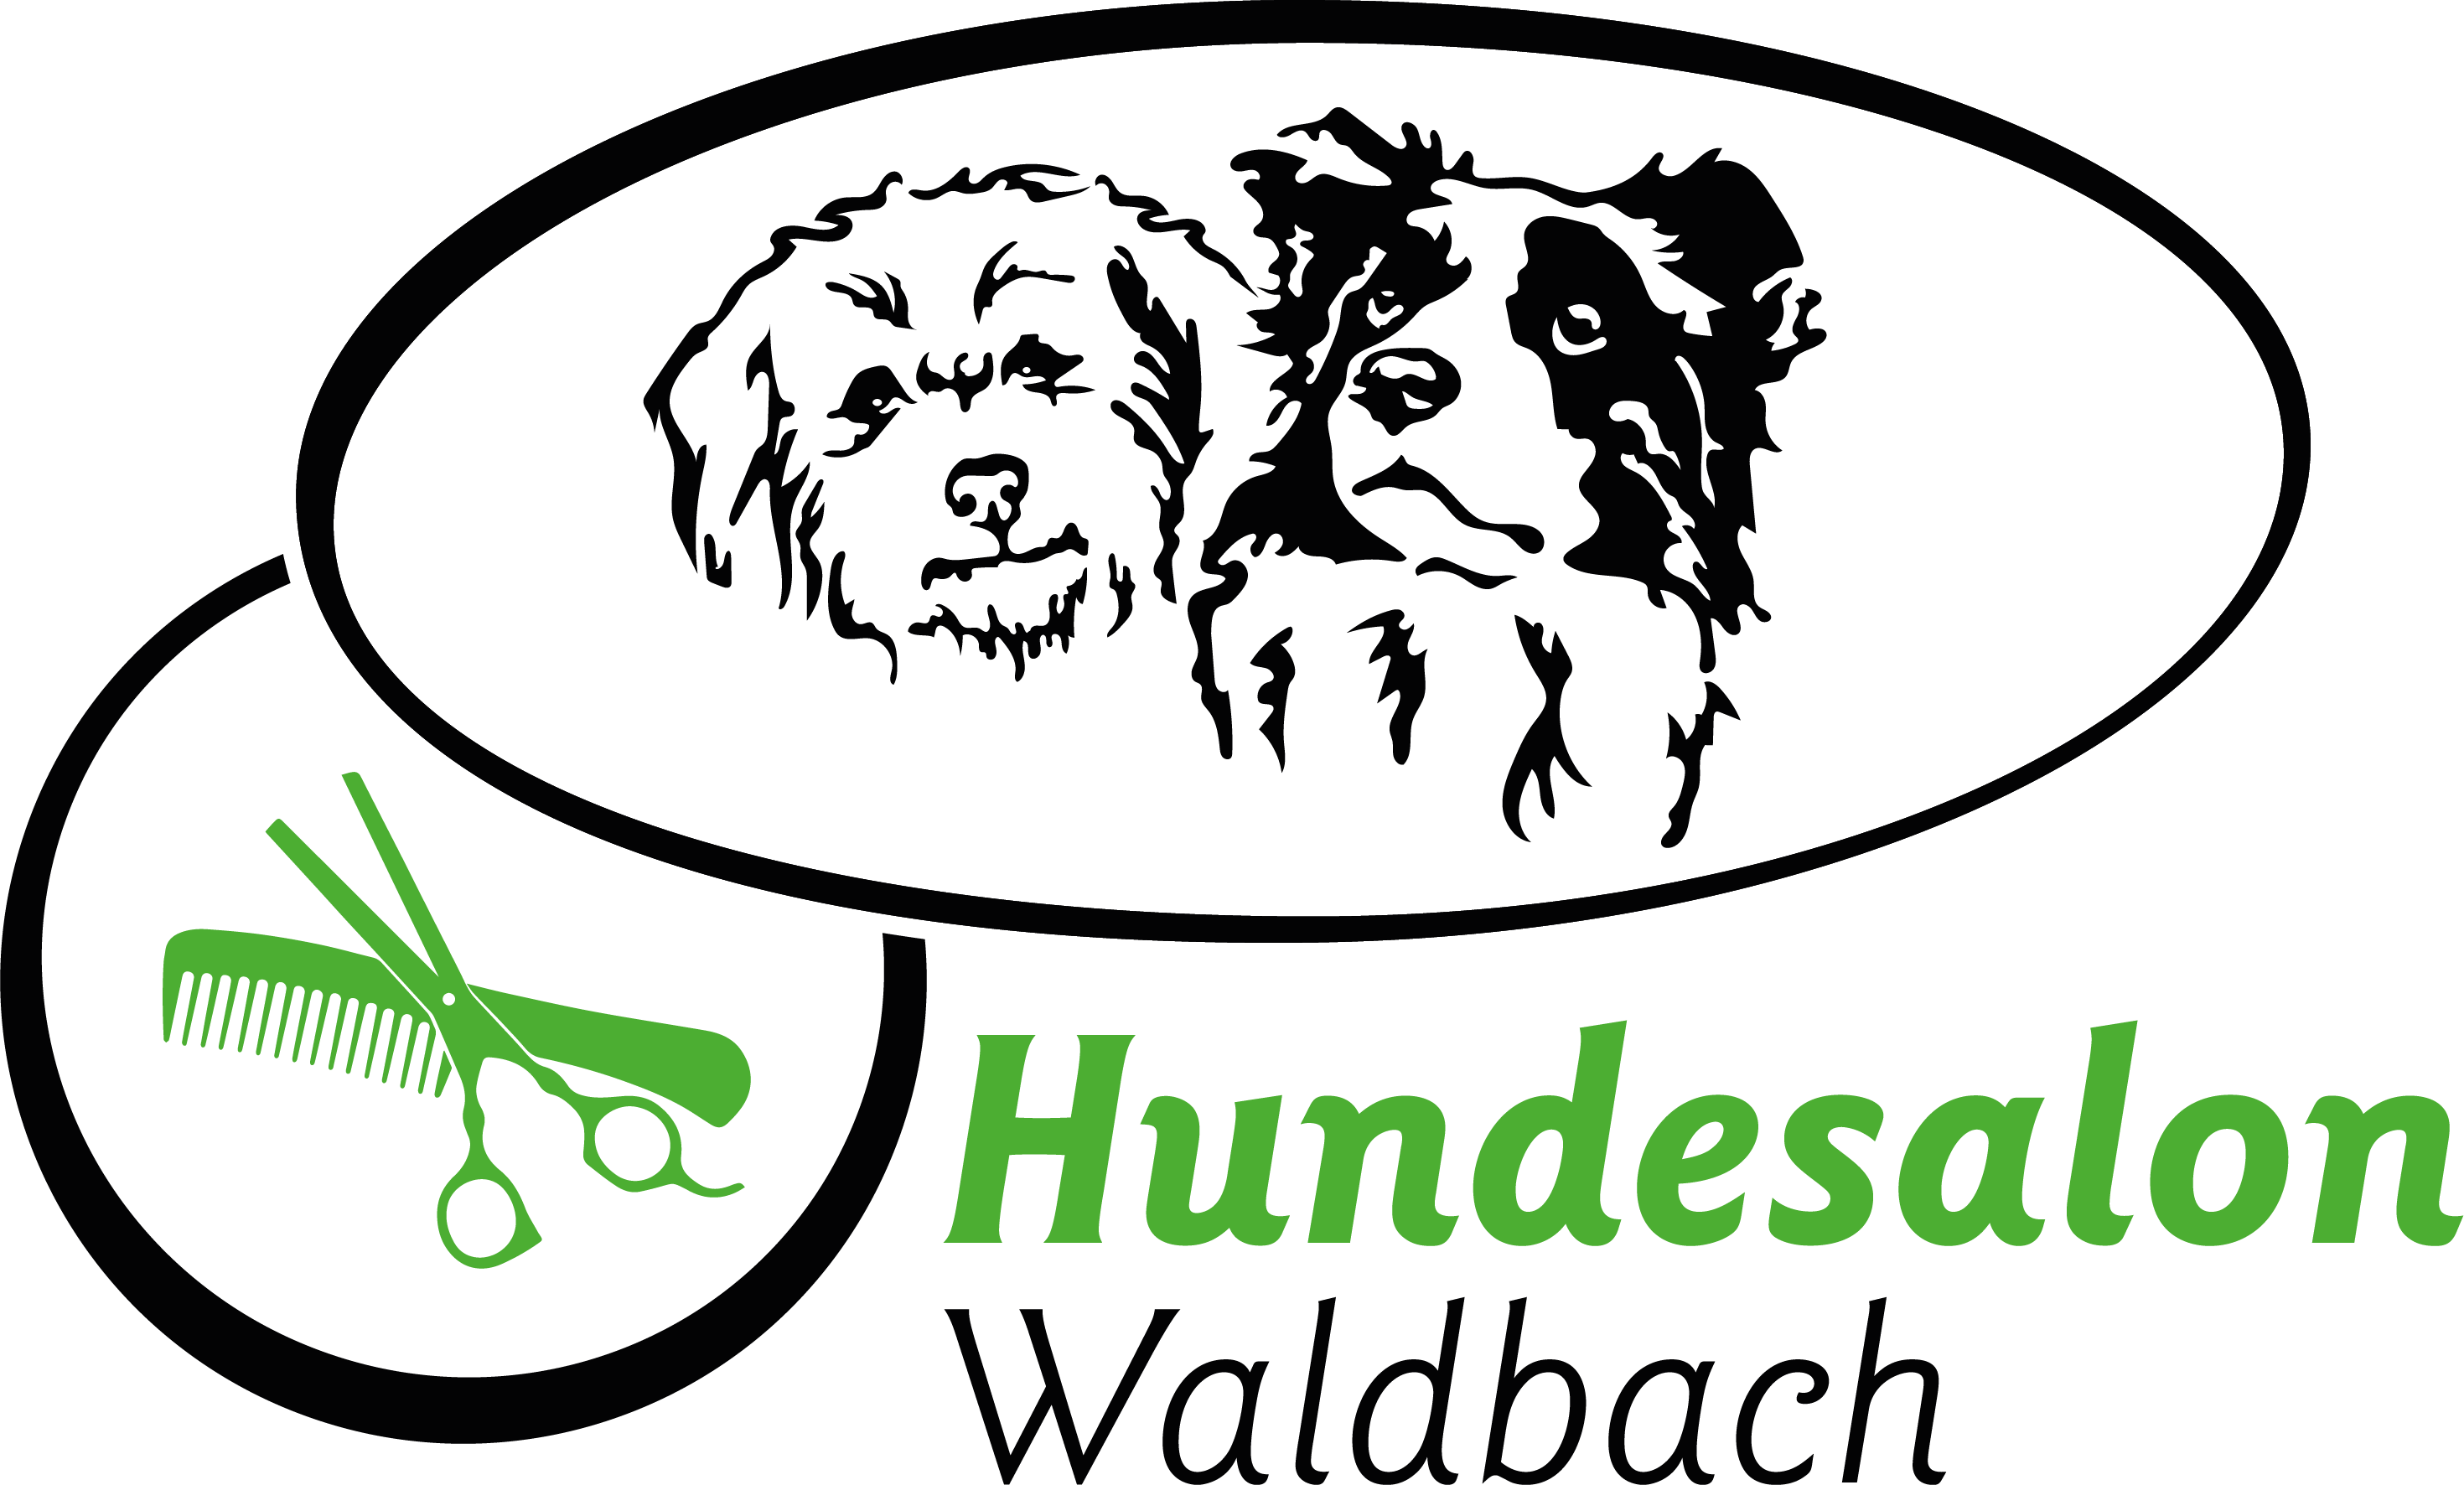 image-11717078-Logo_Hundesalon-c9f0f.png